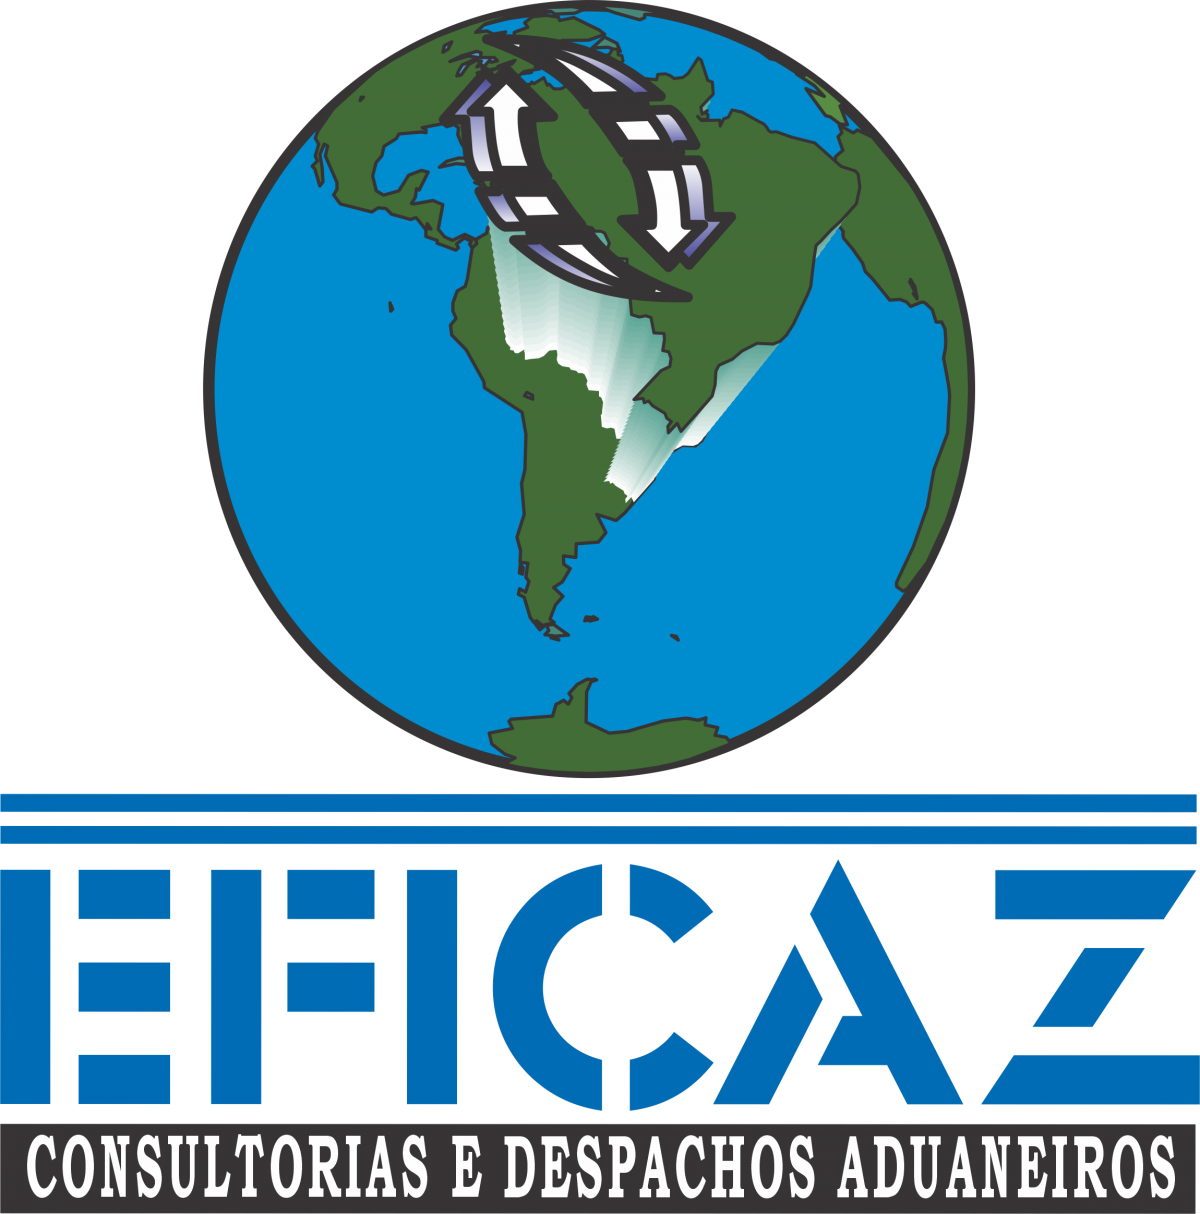 EFICAZ Aduana